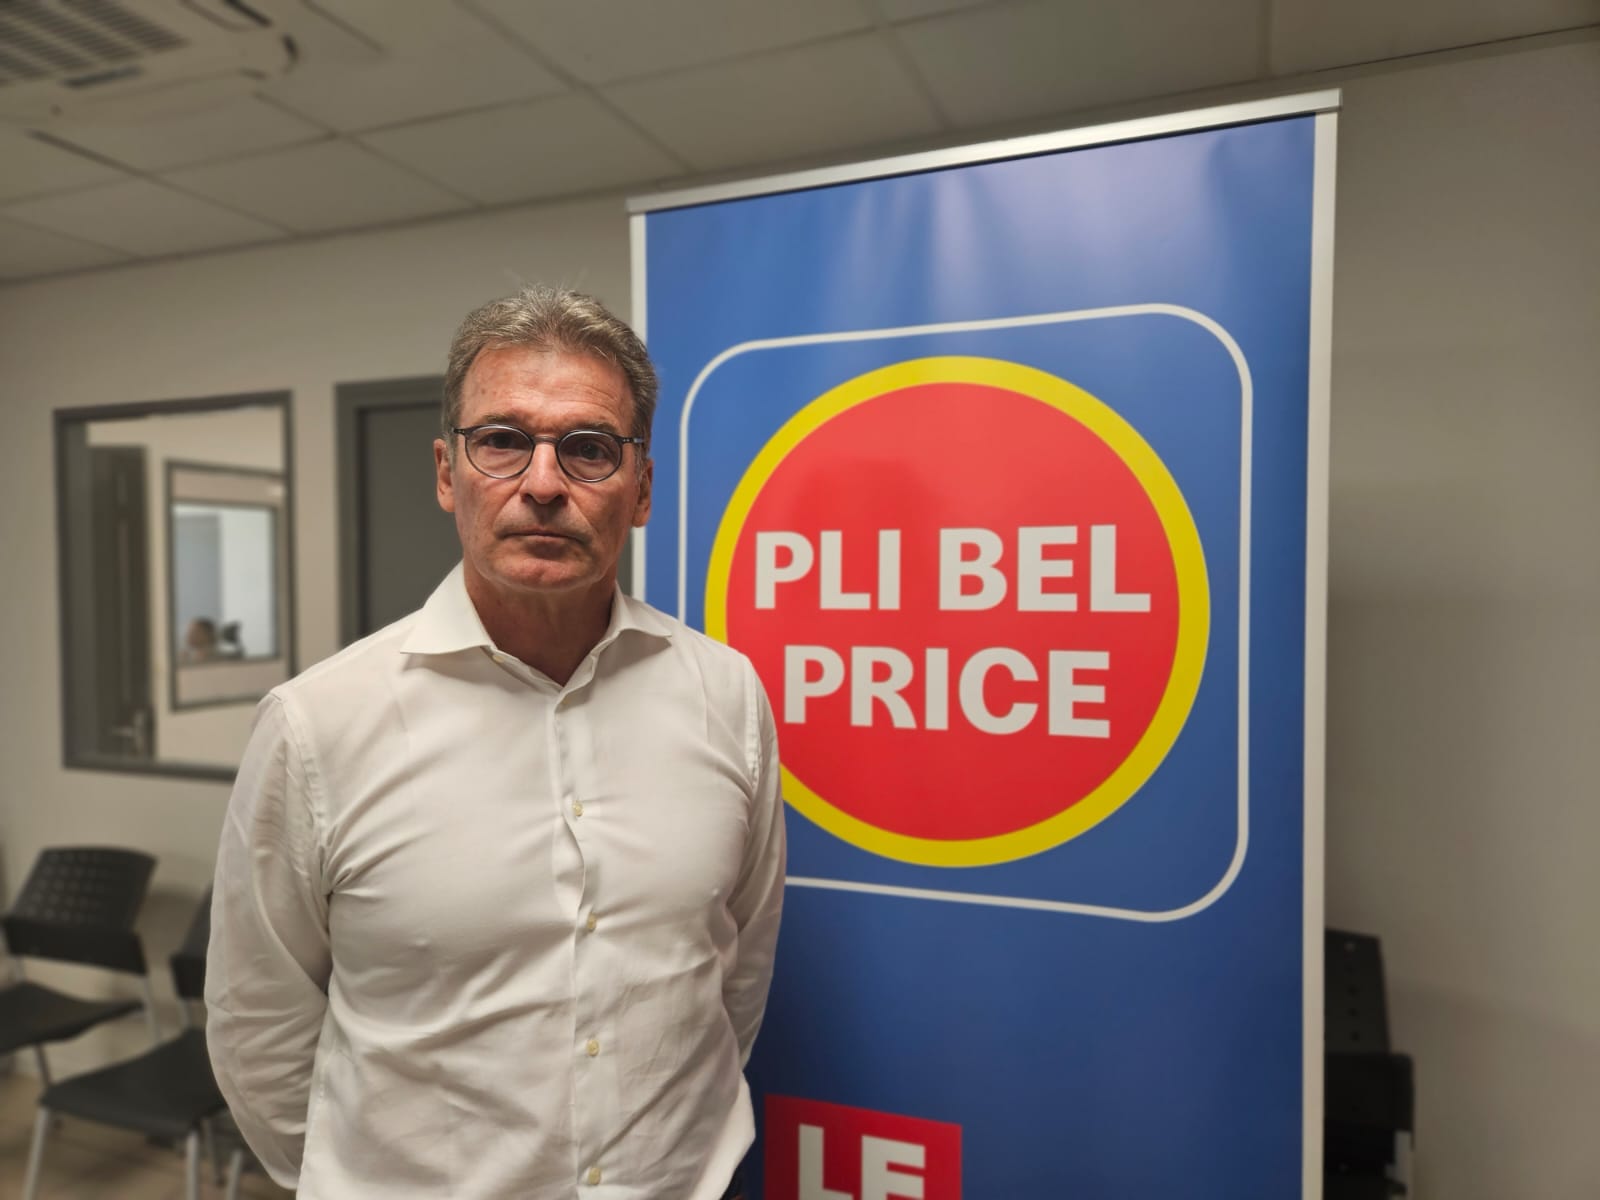     Leader Price devient Pli Bel Price en Martinique

